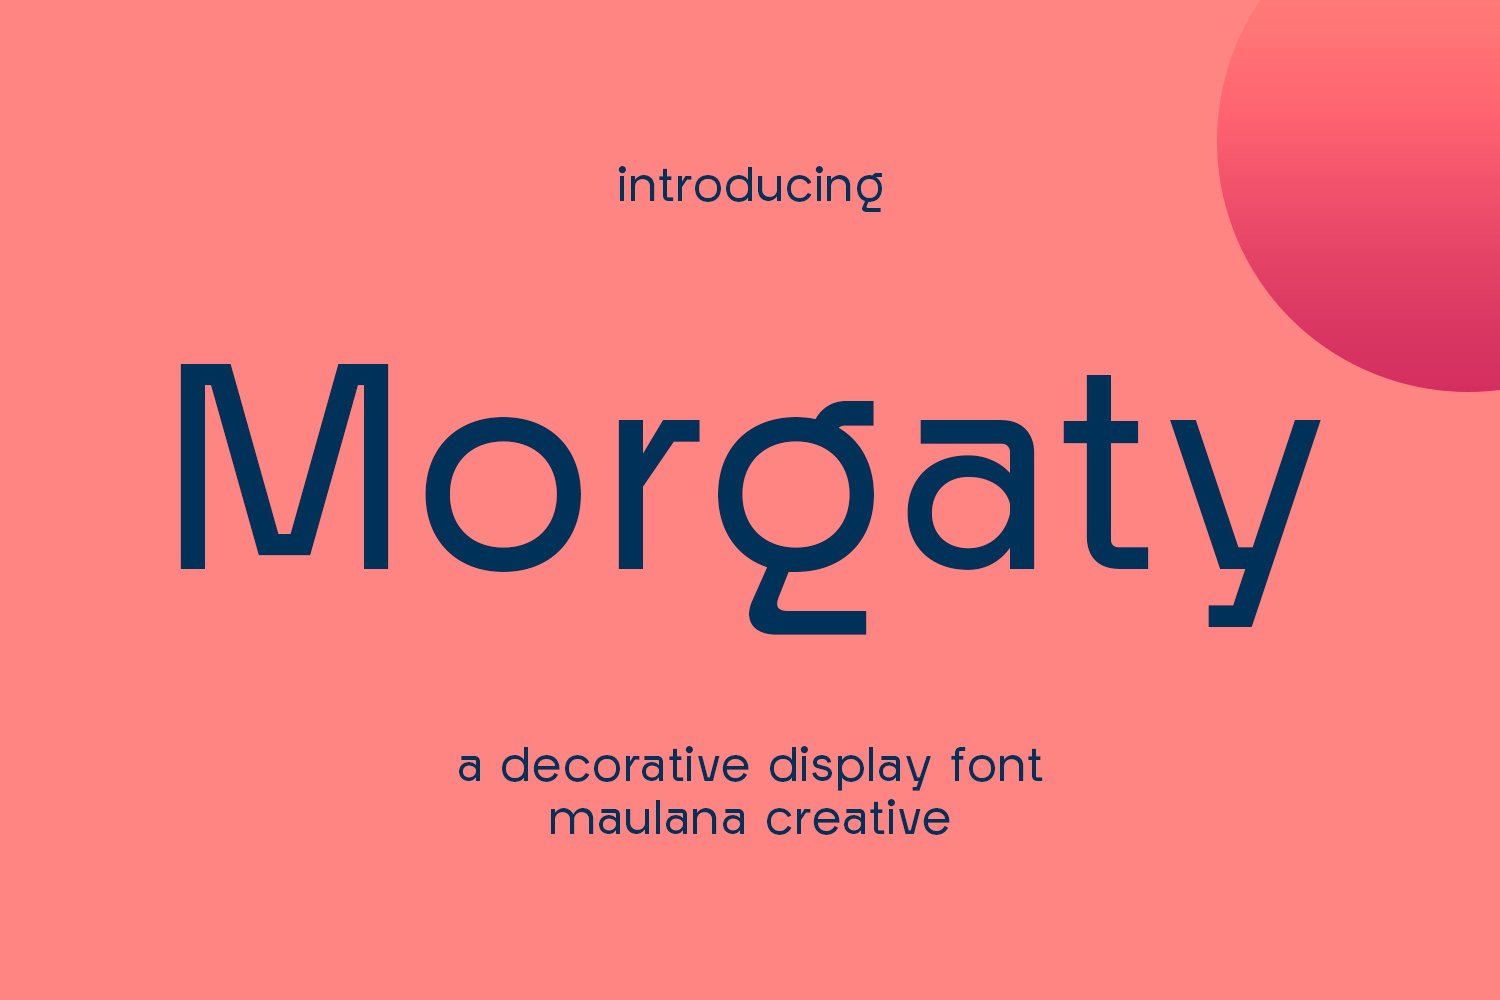 Morgaty Sans Display Font cover image.